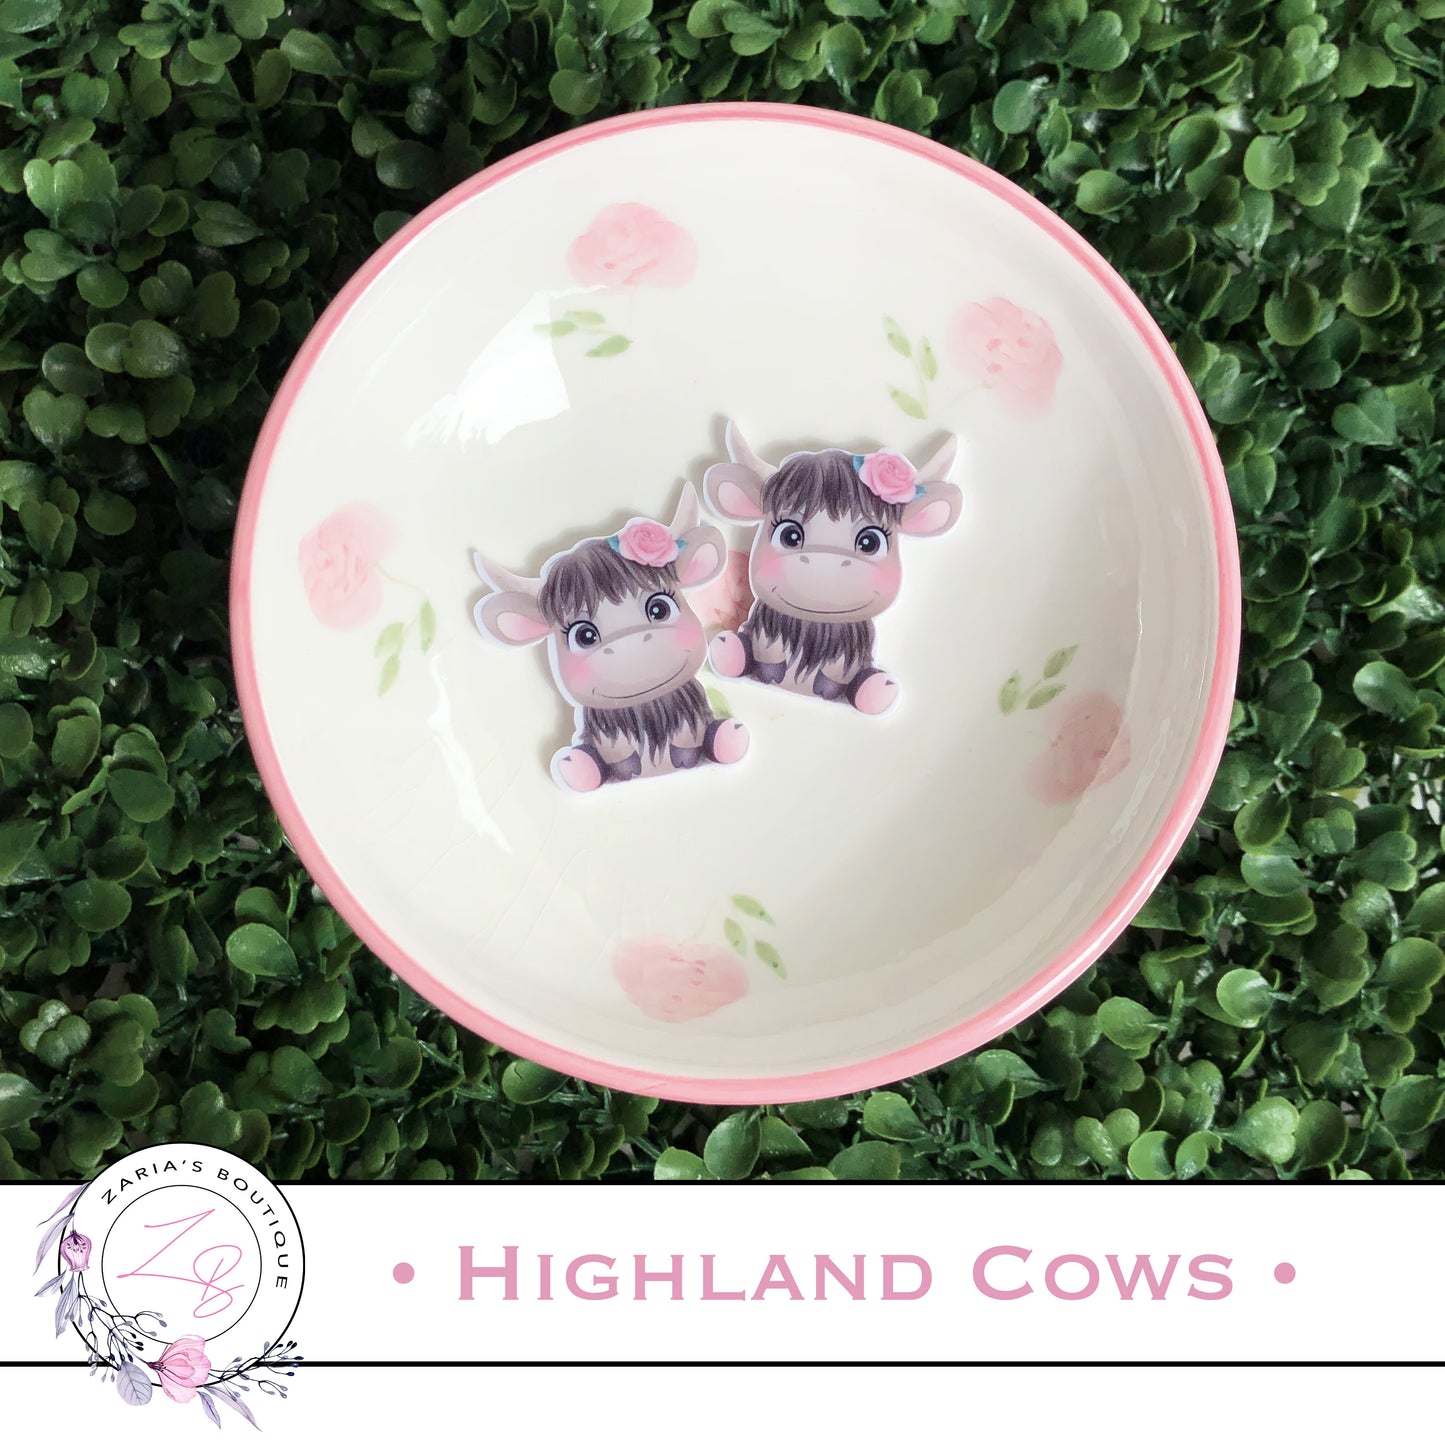 ⋅ Highland Cow Embellishment ⋅ Flatback Resin ⋅ 2 Pieces ⋅